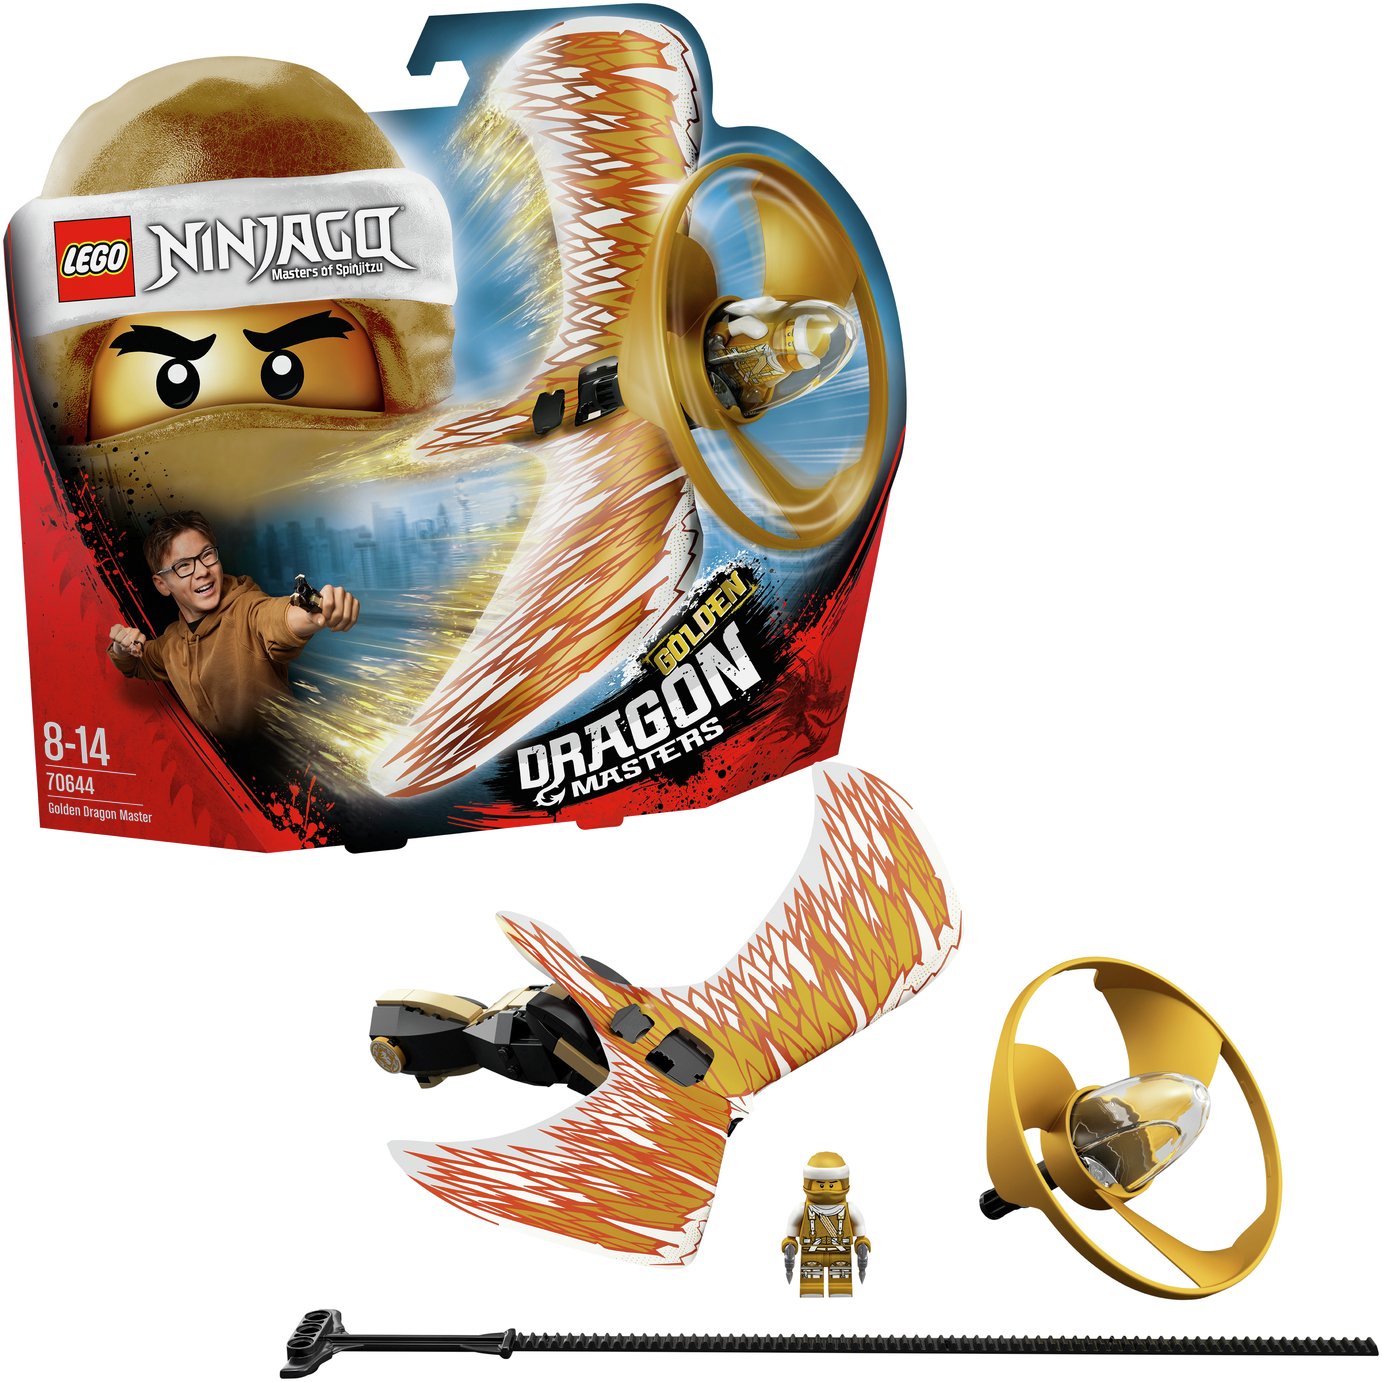 LEGO Ninjago Golden Dragon Master - 70644